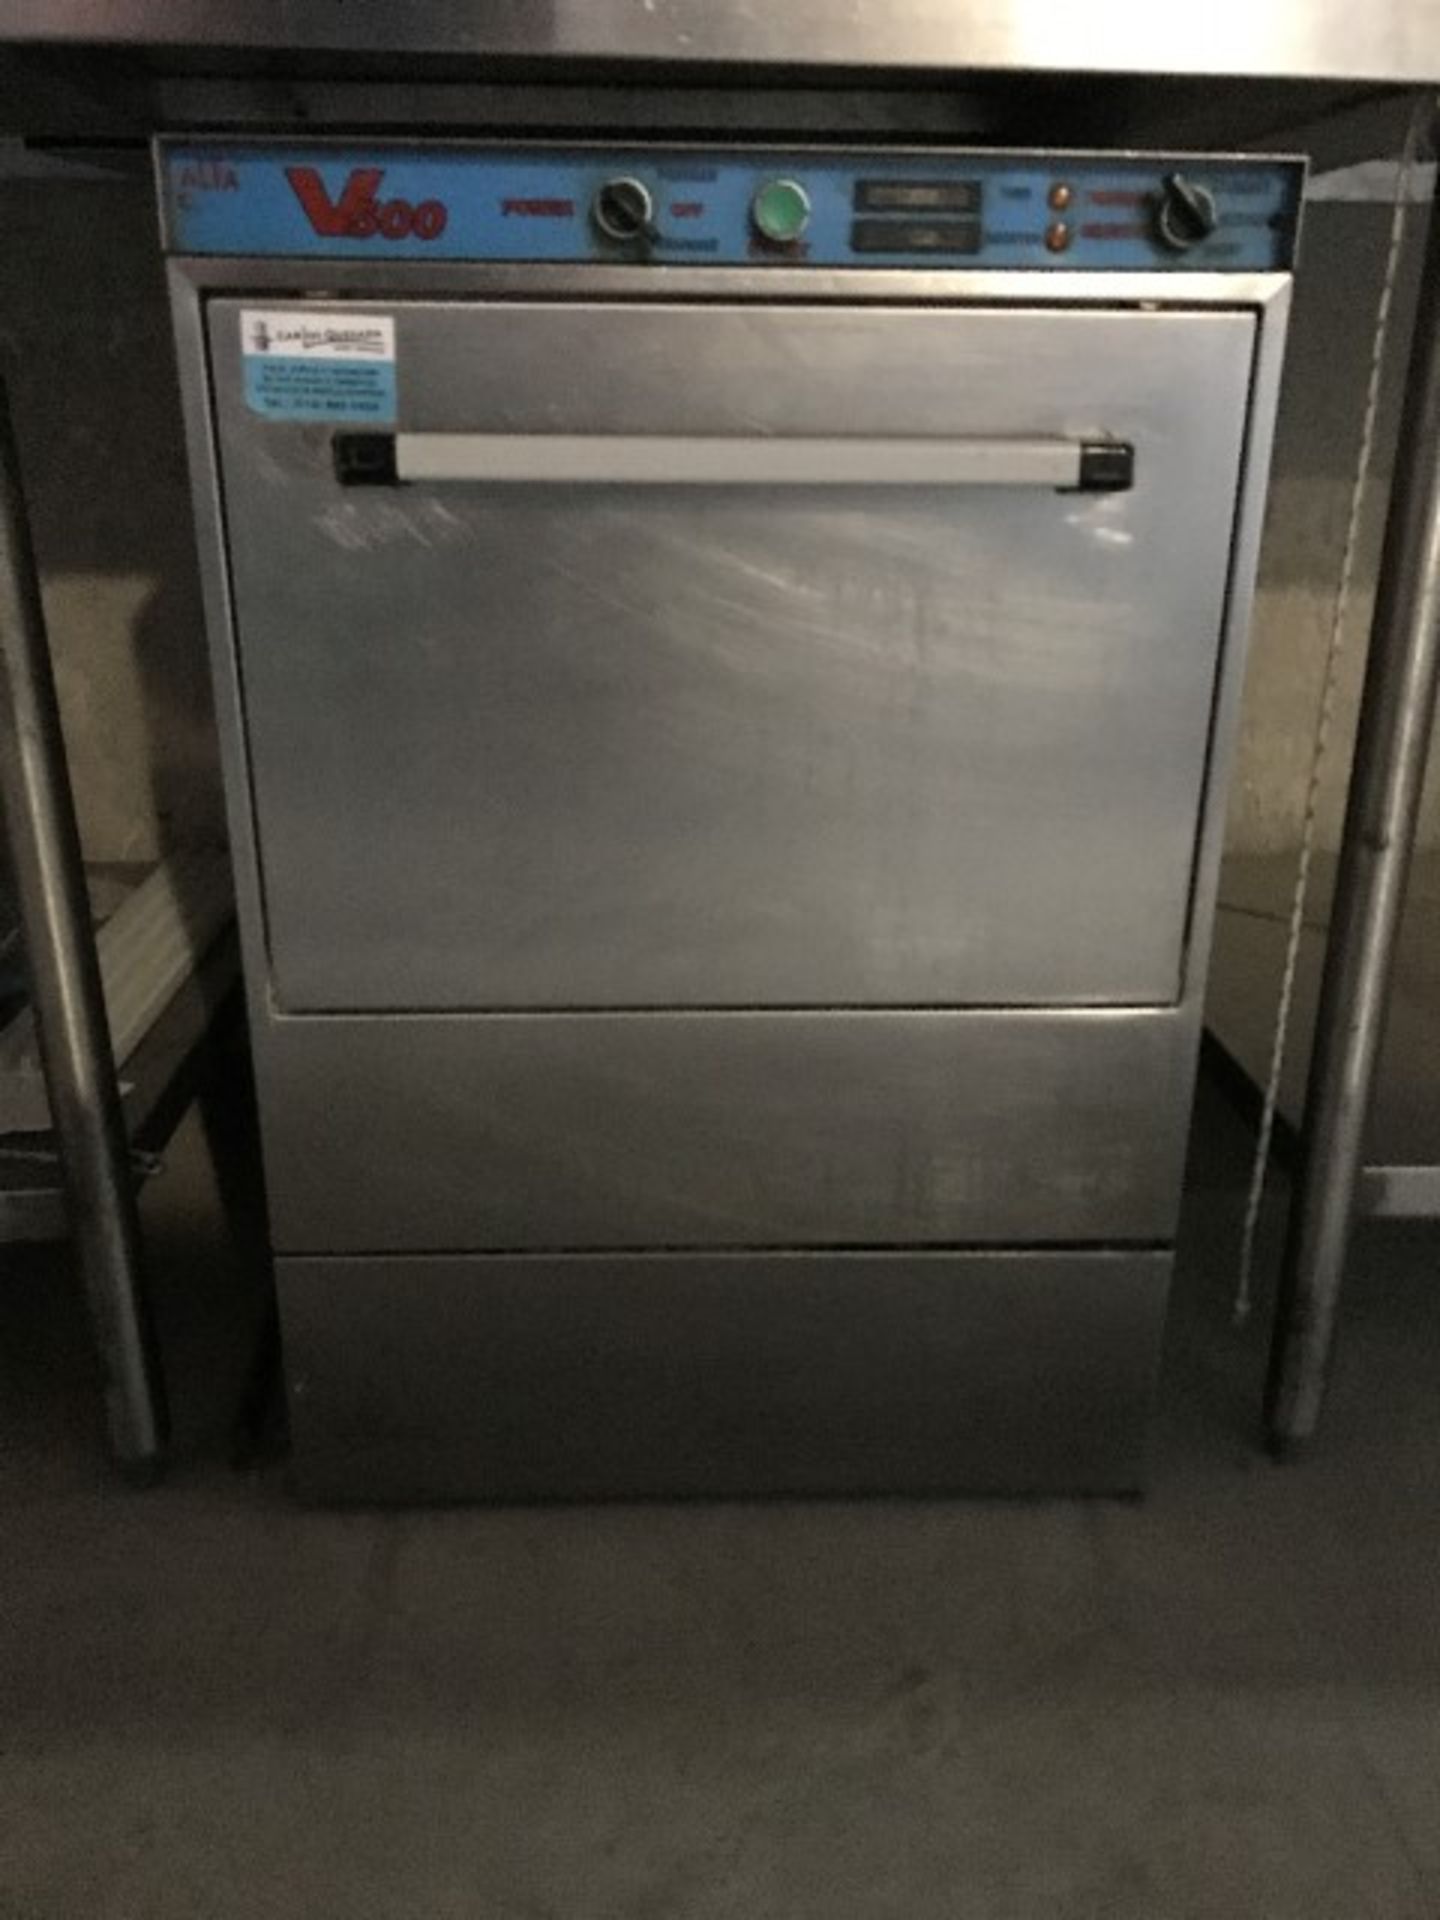 Alpha V500 under the counter dishwasher machine